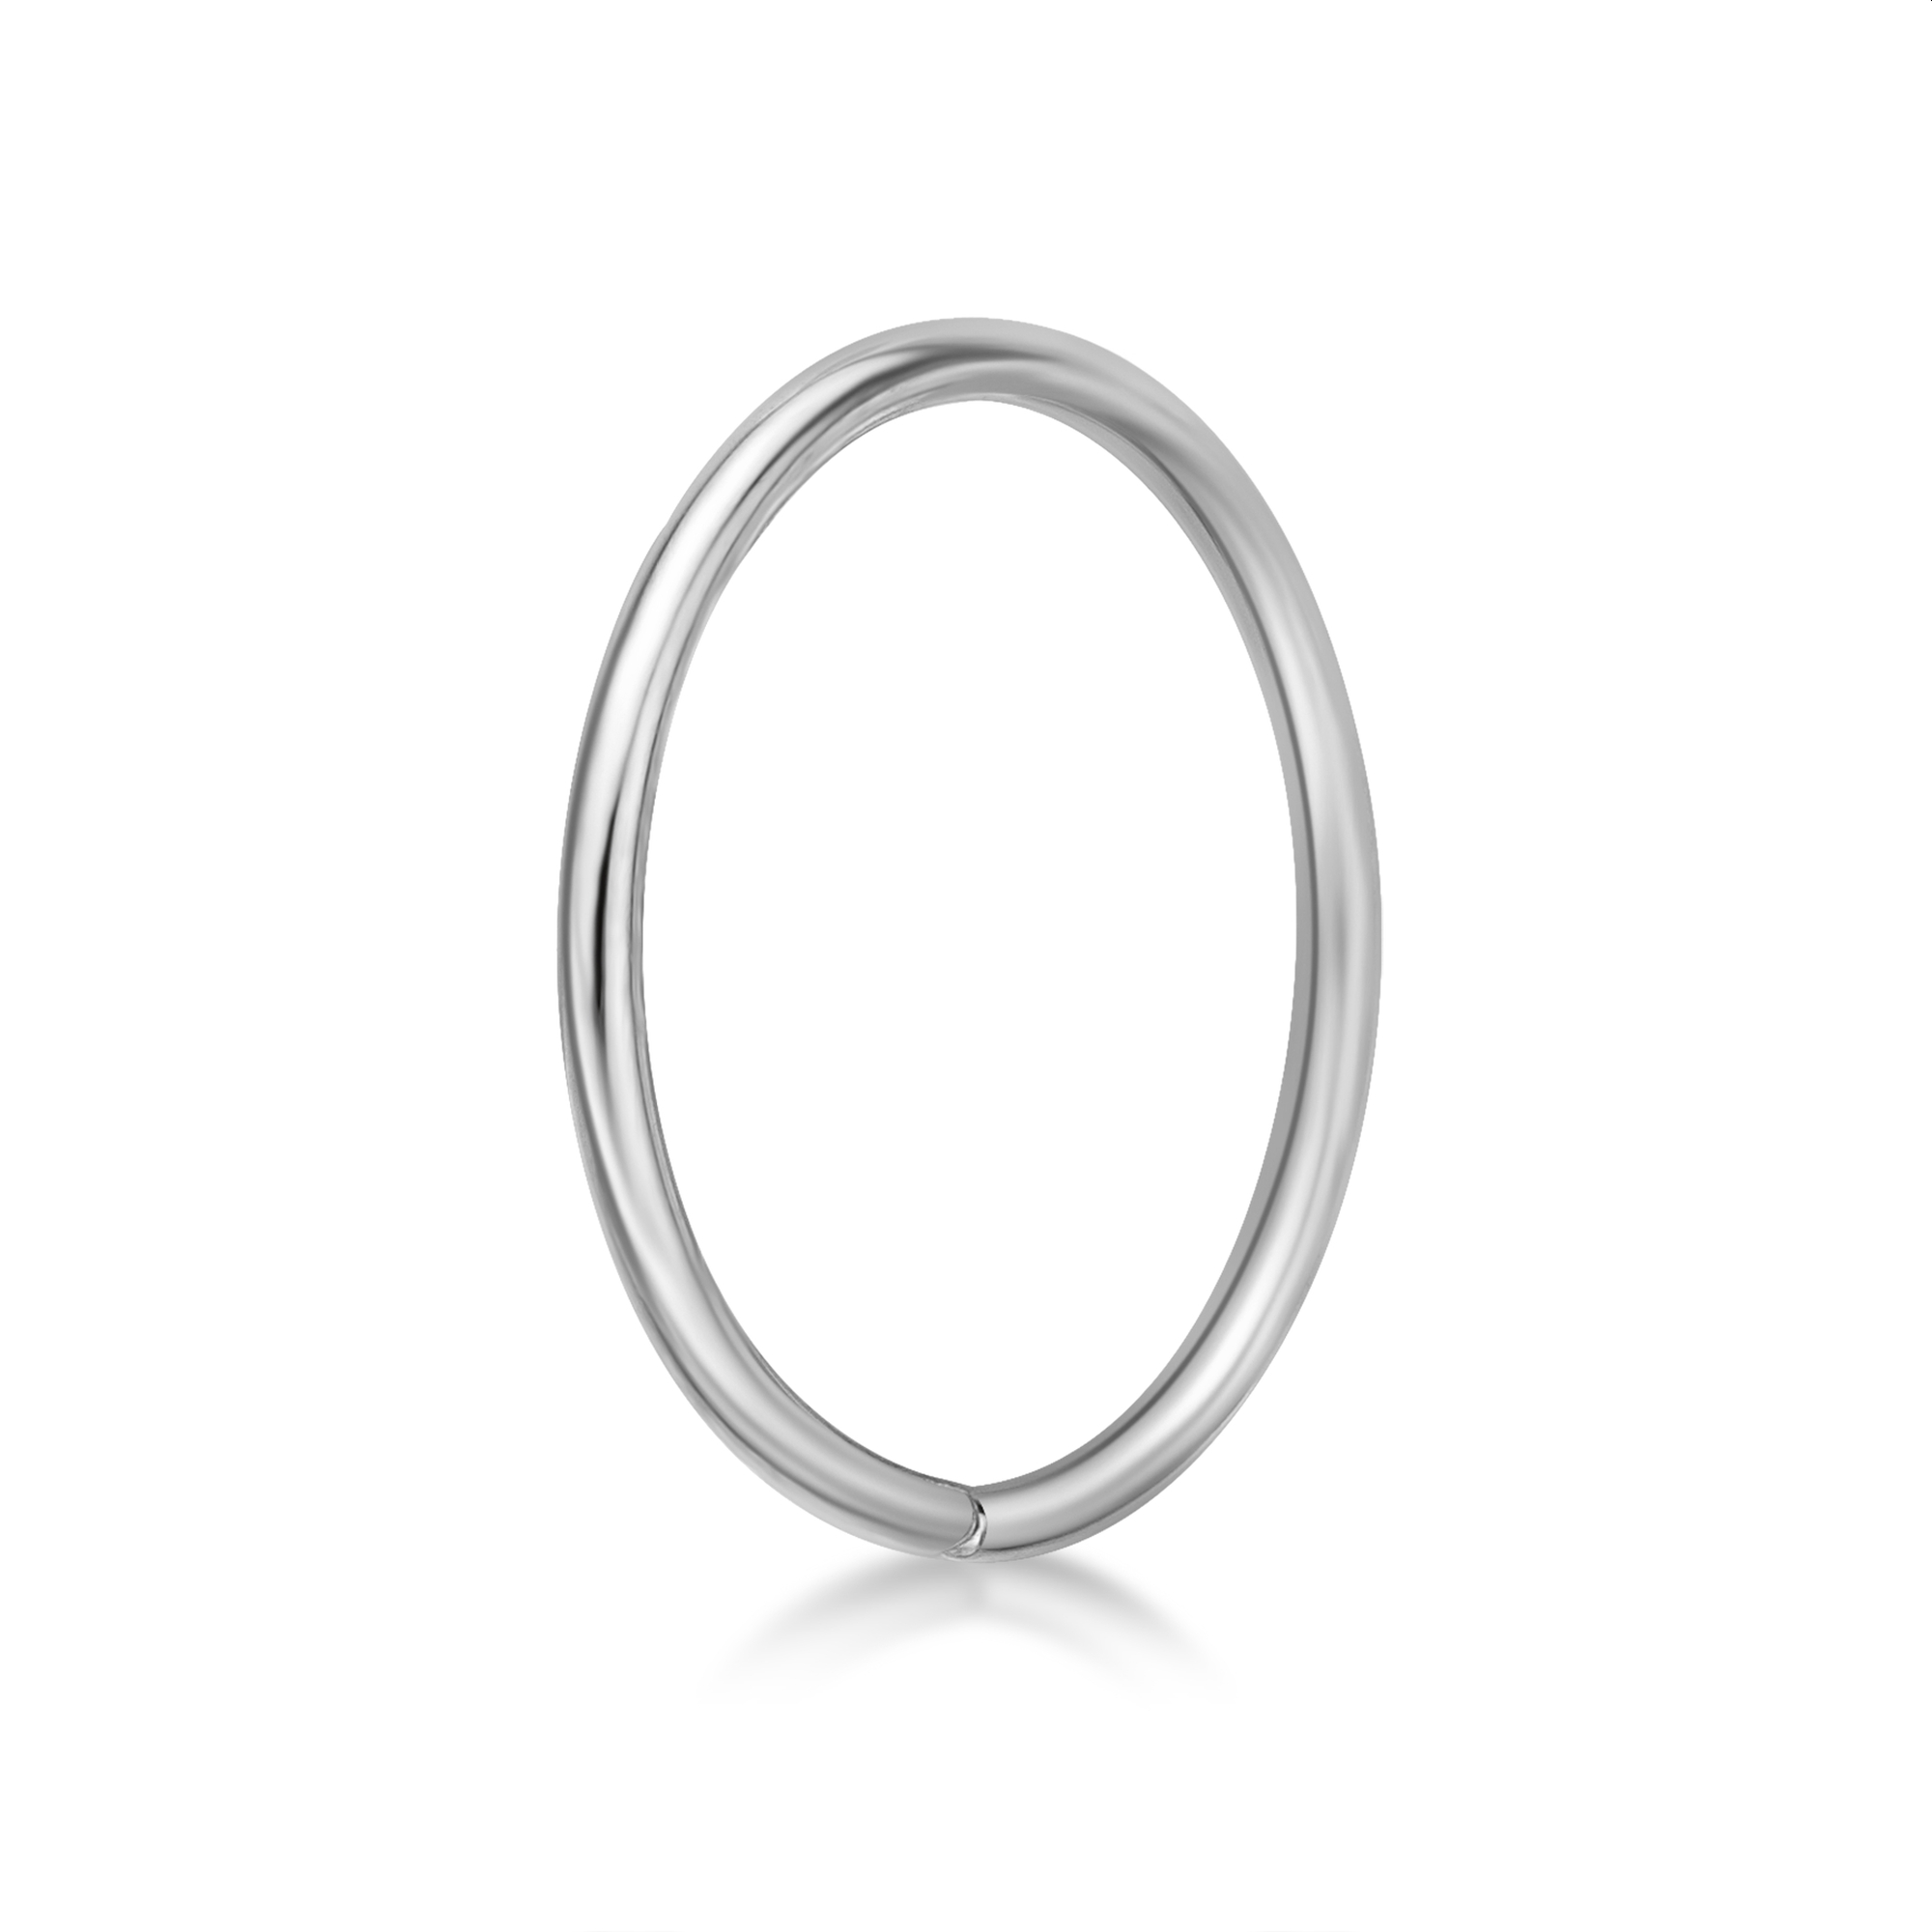 Lavari Jewelers Women's Hoop Nose Ring, 14K White Gold, 10 MM Diameter, 20 Gauge